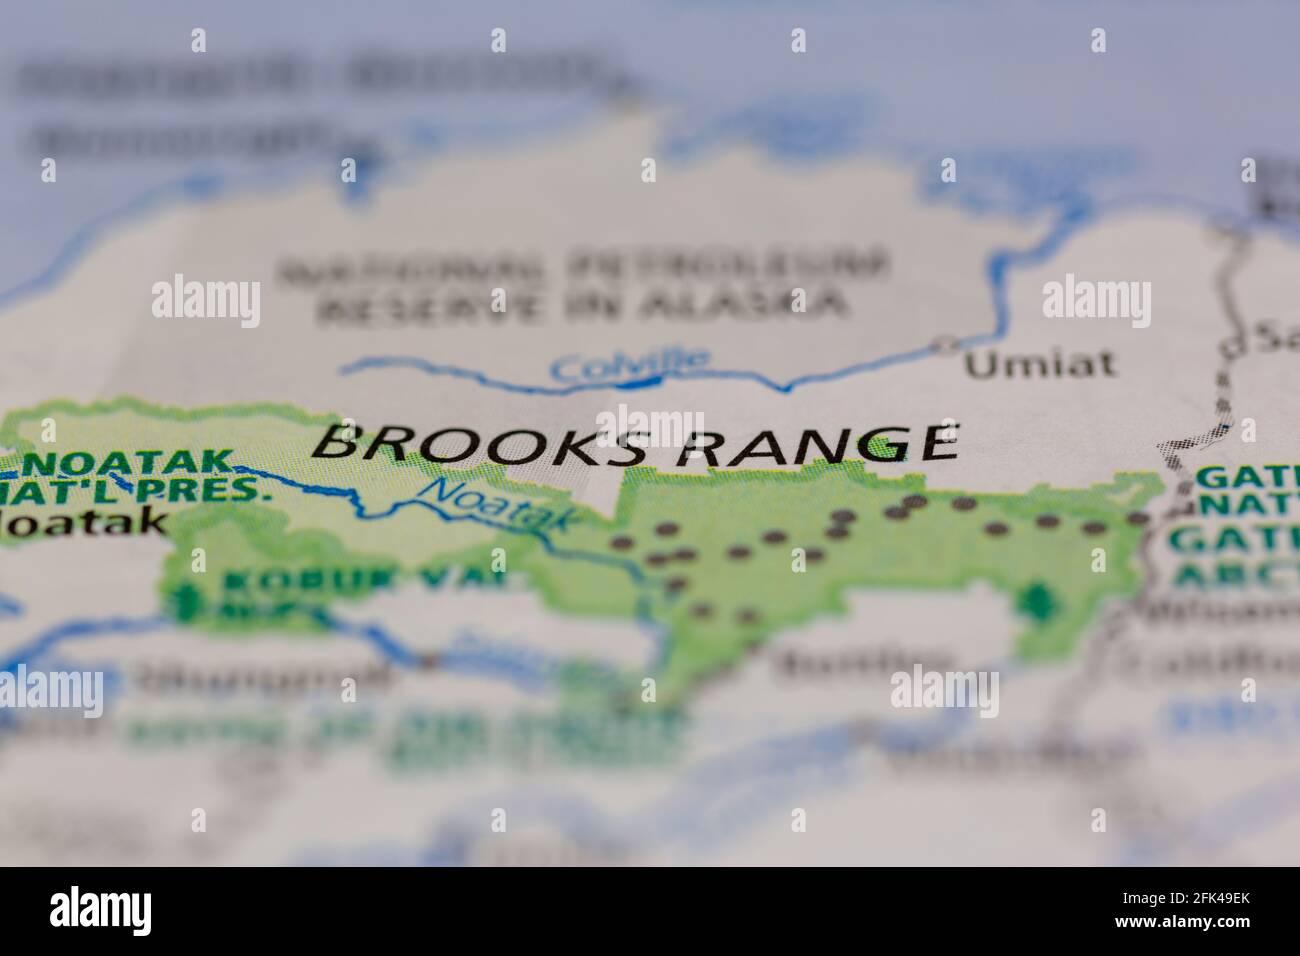 Brooks Range Alaska Usa Shown On A Geography Map Or Road Map 2FK49EK 